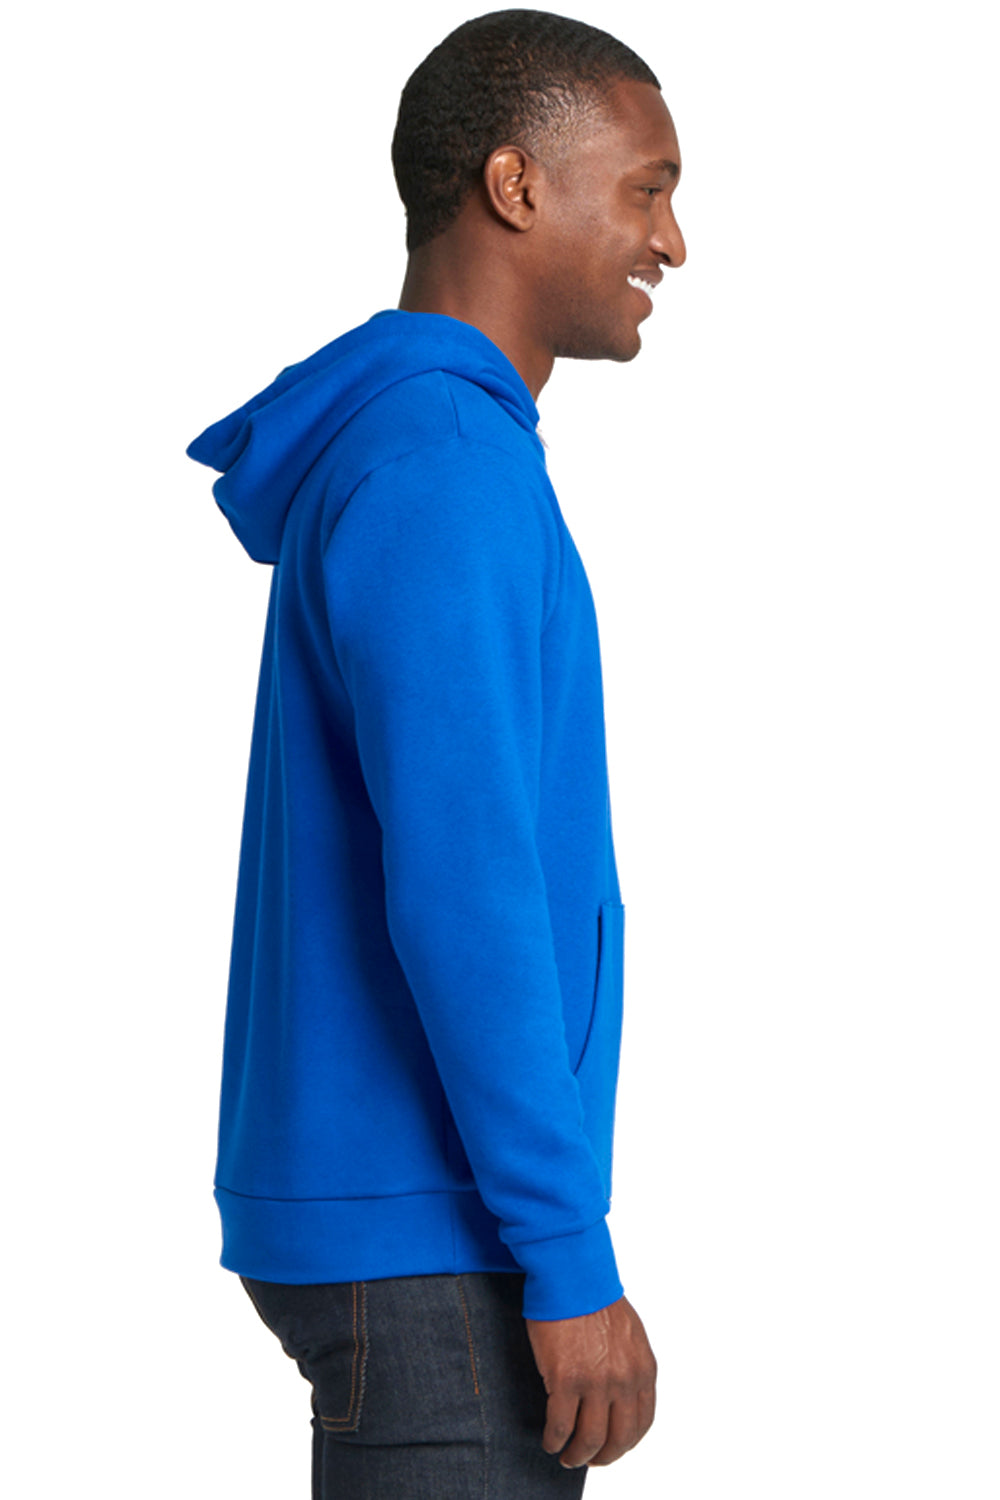 Next Level 9303 Fleece Hooded Sweatshirt Hoodie Royal Blue Side